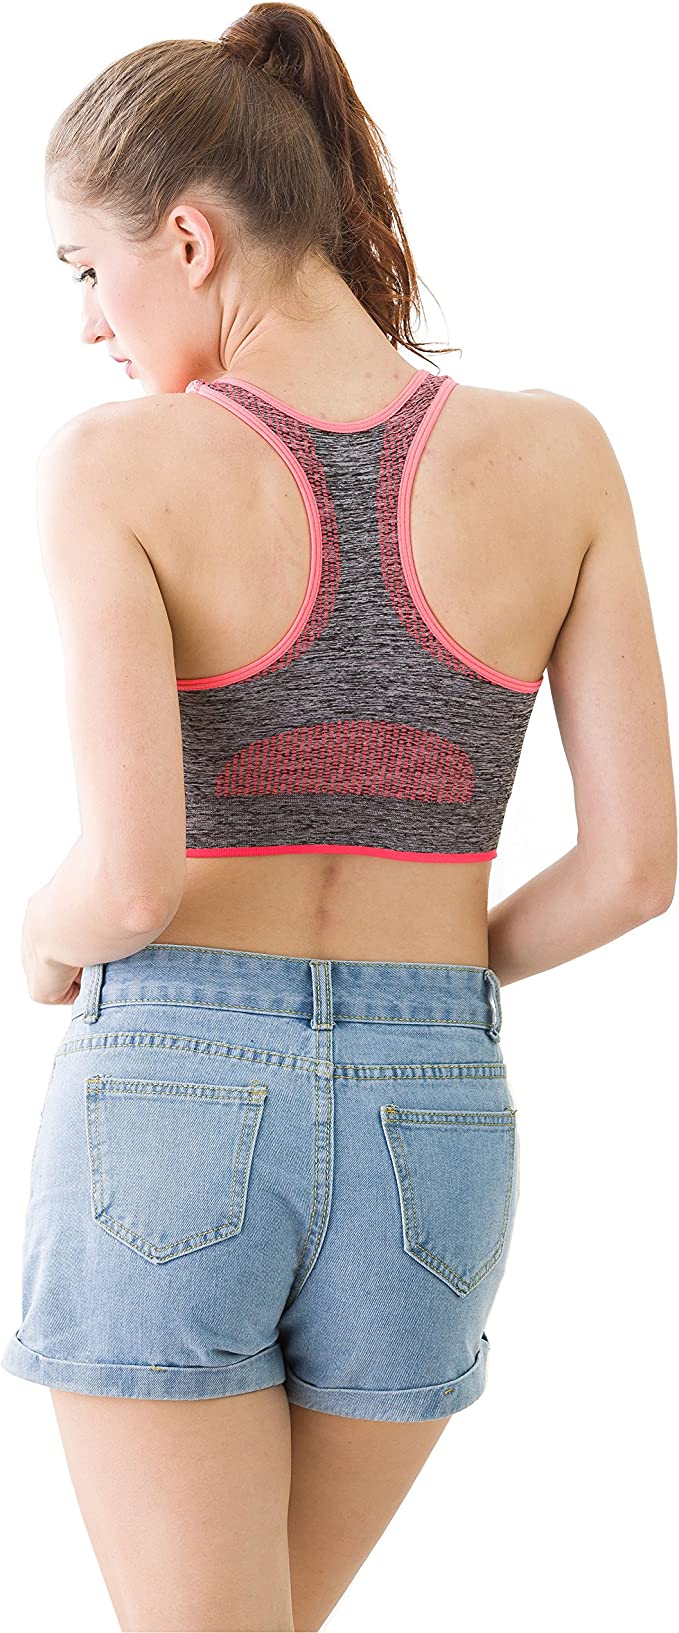 Qcmgmg Sports Bra Push Up Racerback No Wire Bras for Women Comfort Bra T  Shirt Bras for Women No Underwire Hot Pink XL 